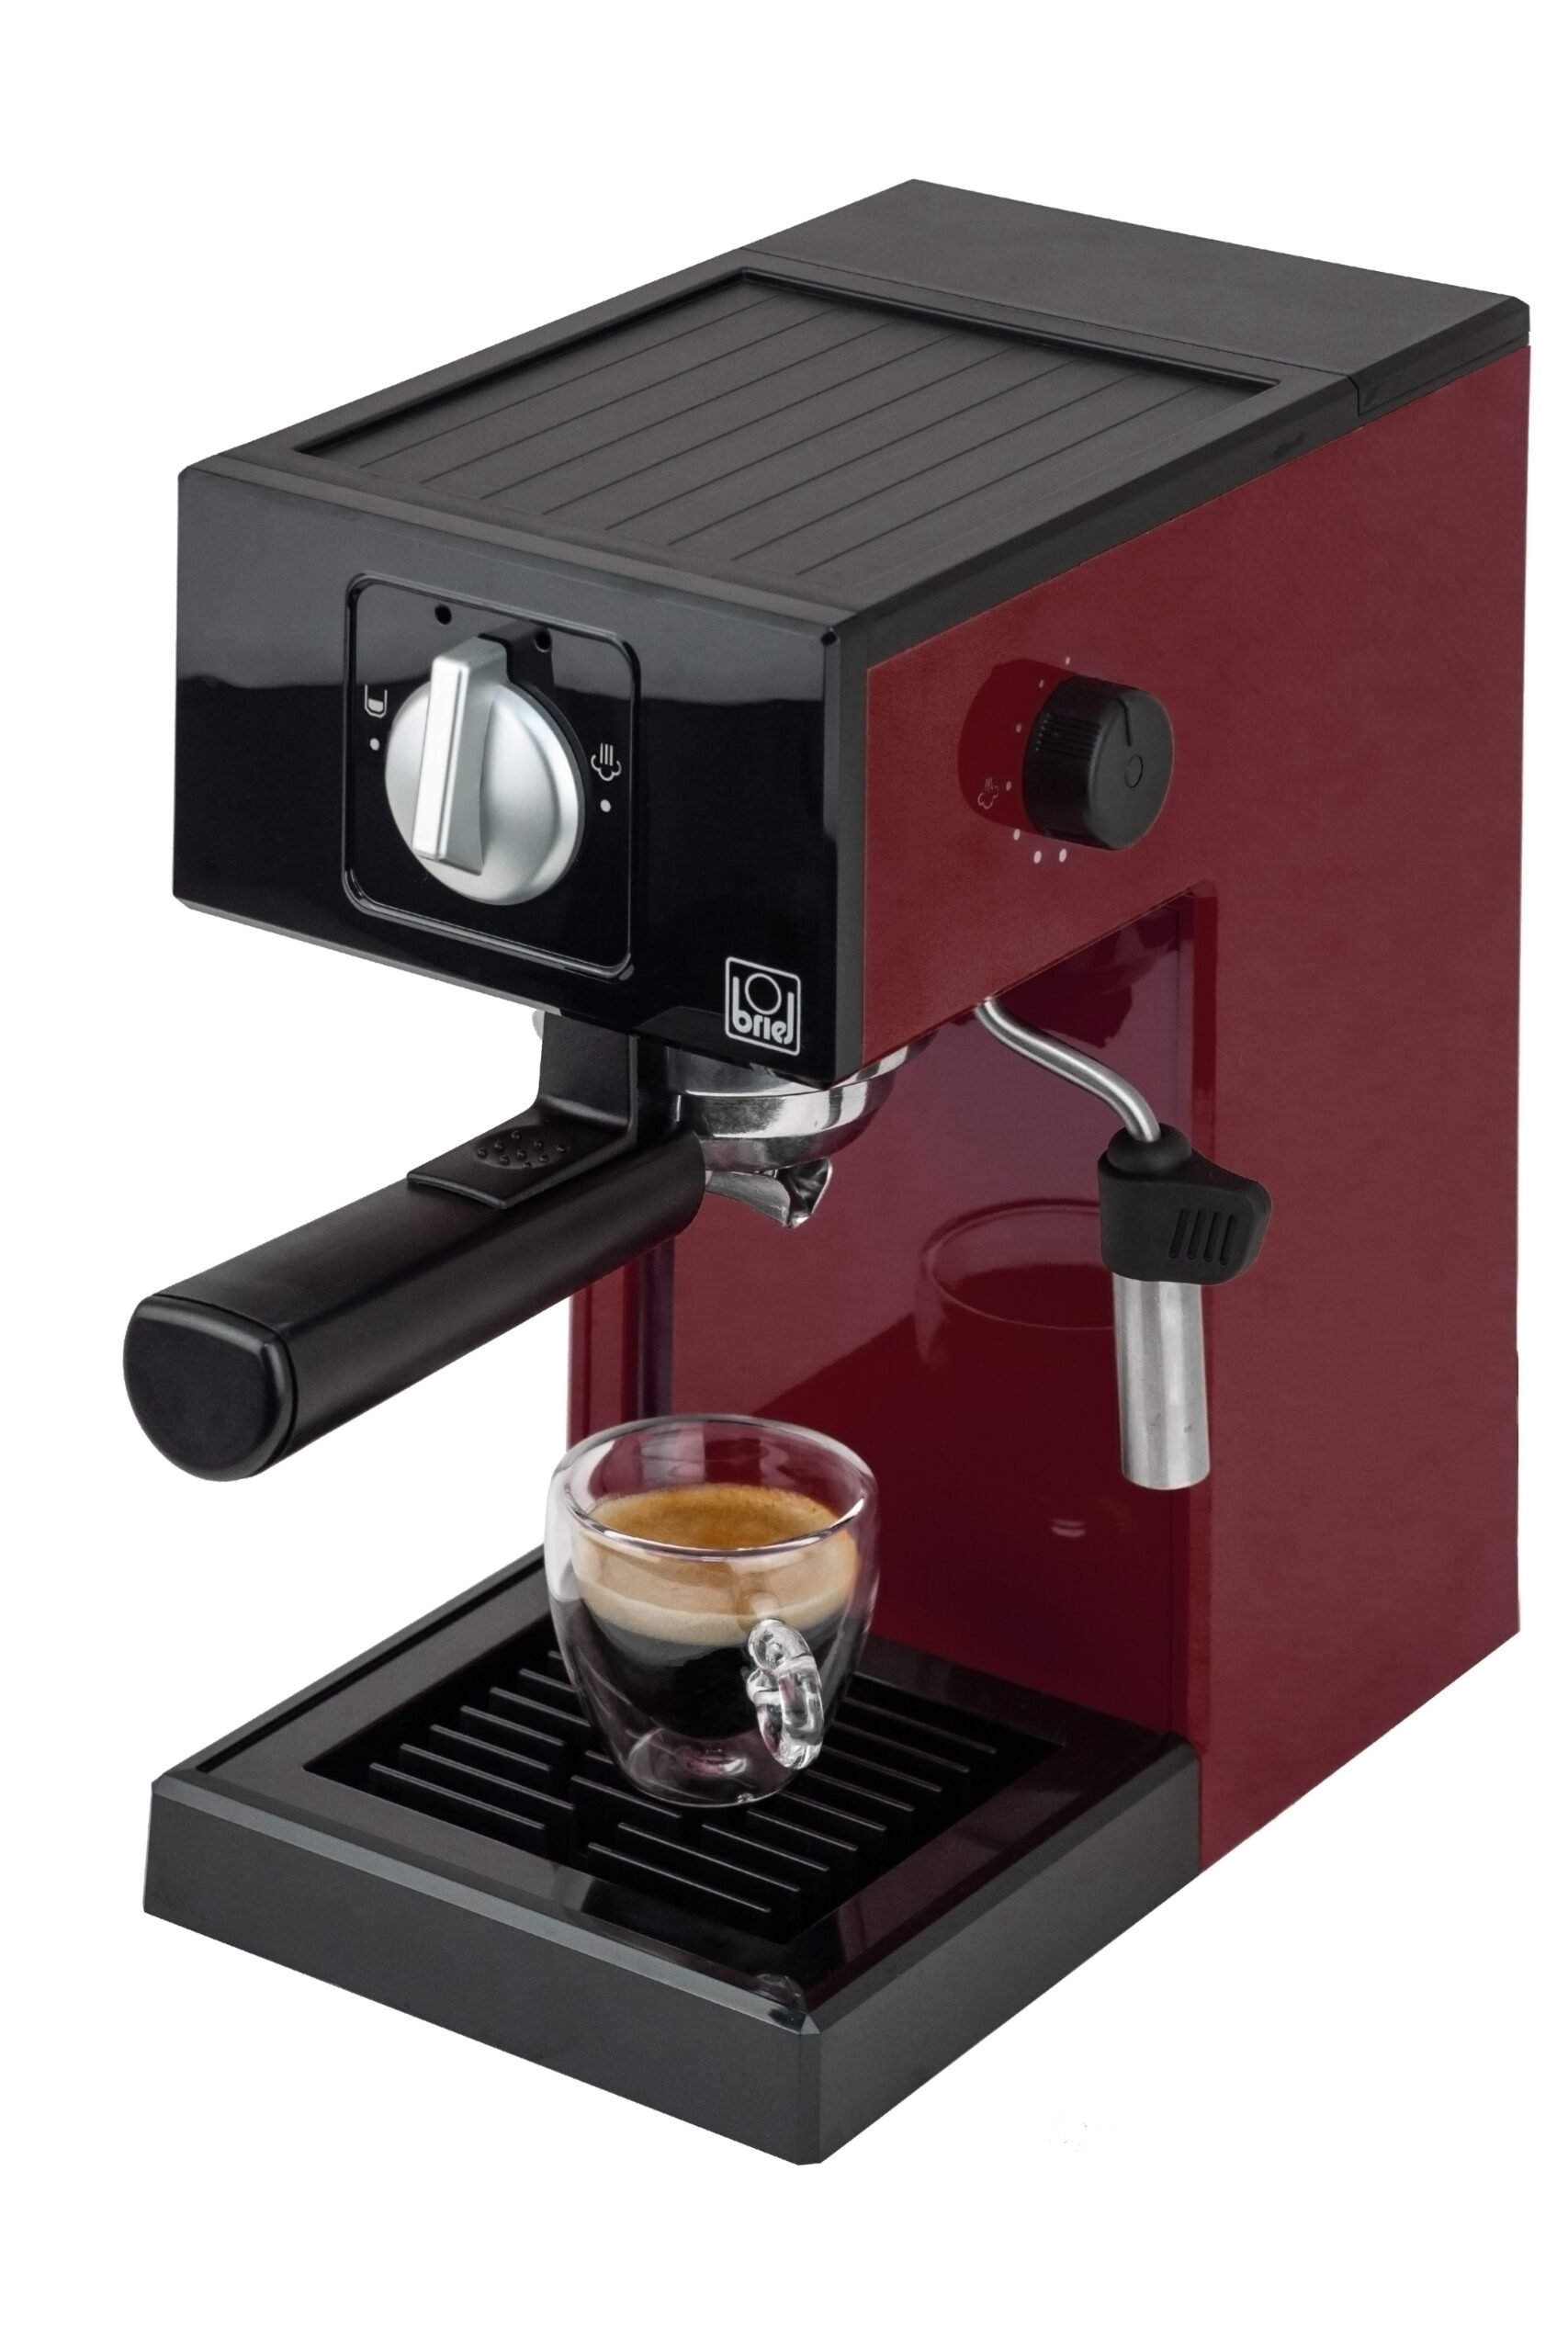 Maquina-cafe-espresso-A1-MANUAL-WINE-6-scaled-1.jpg